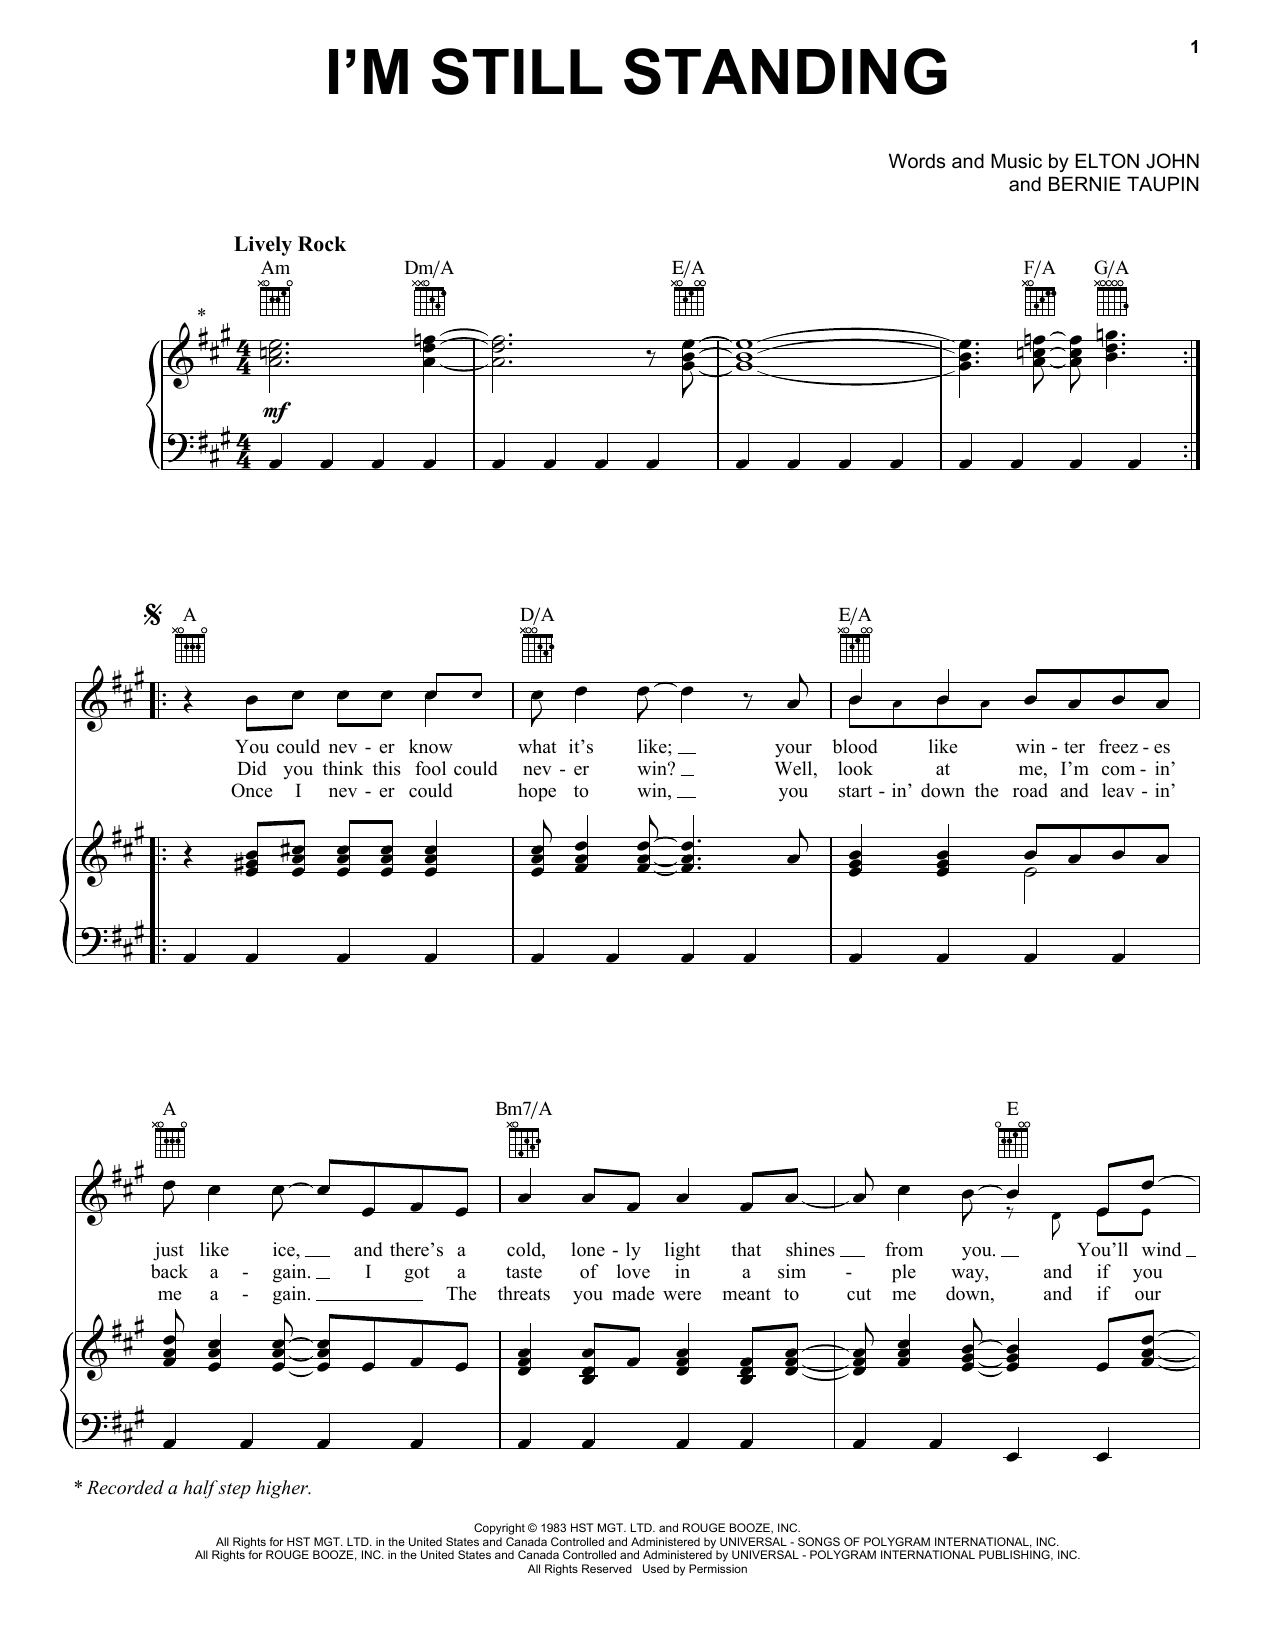 Elton John I'm Still Standing sheet music notes and chords. Download Printable PDF.